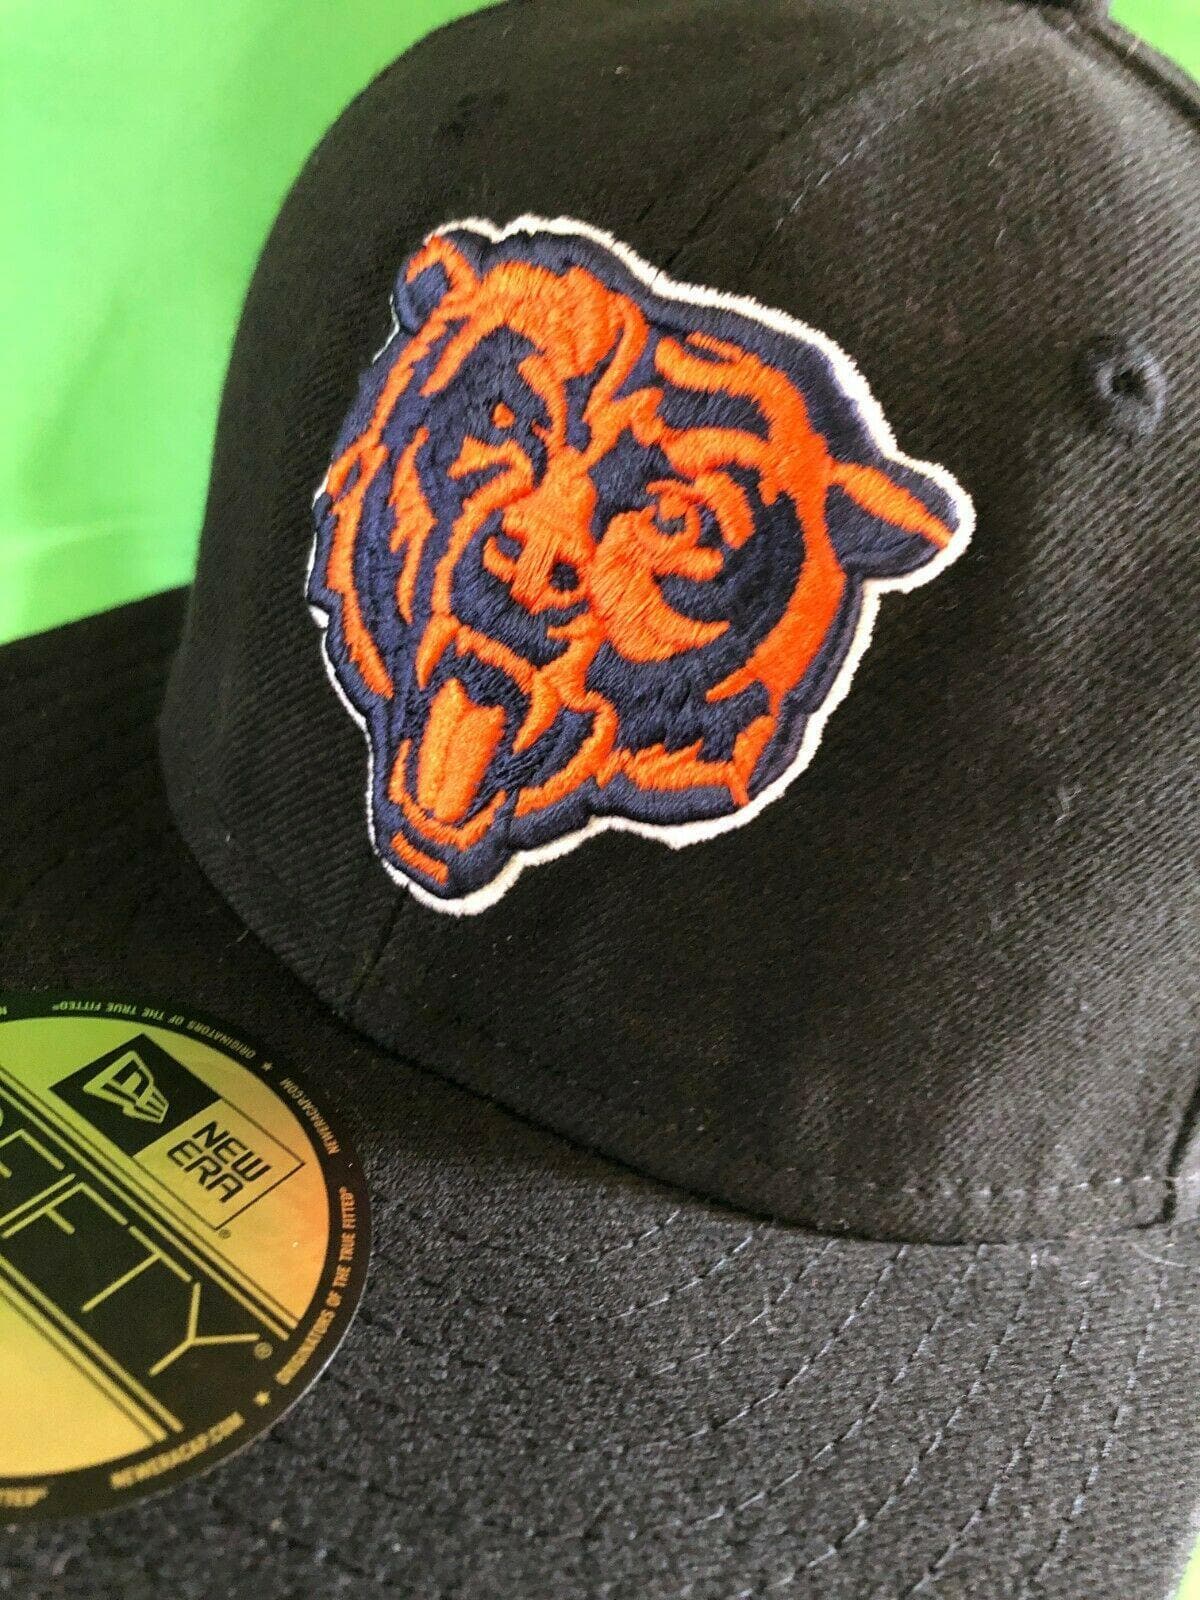 NFL Chicago Bears New Era 59FIFTY Youth Baseball Hat/Cap Size 6-3/8 NWT